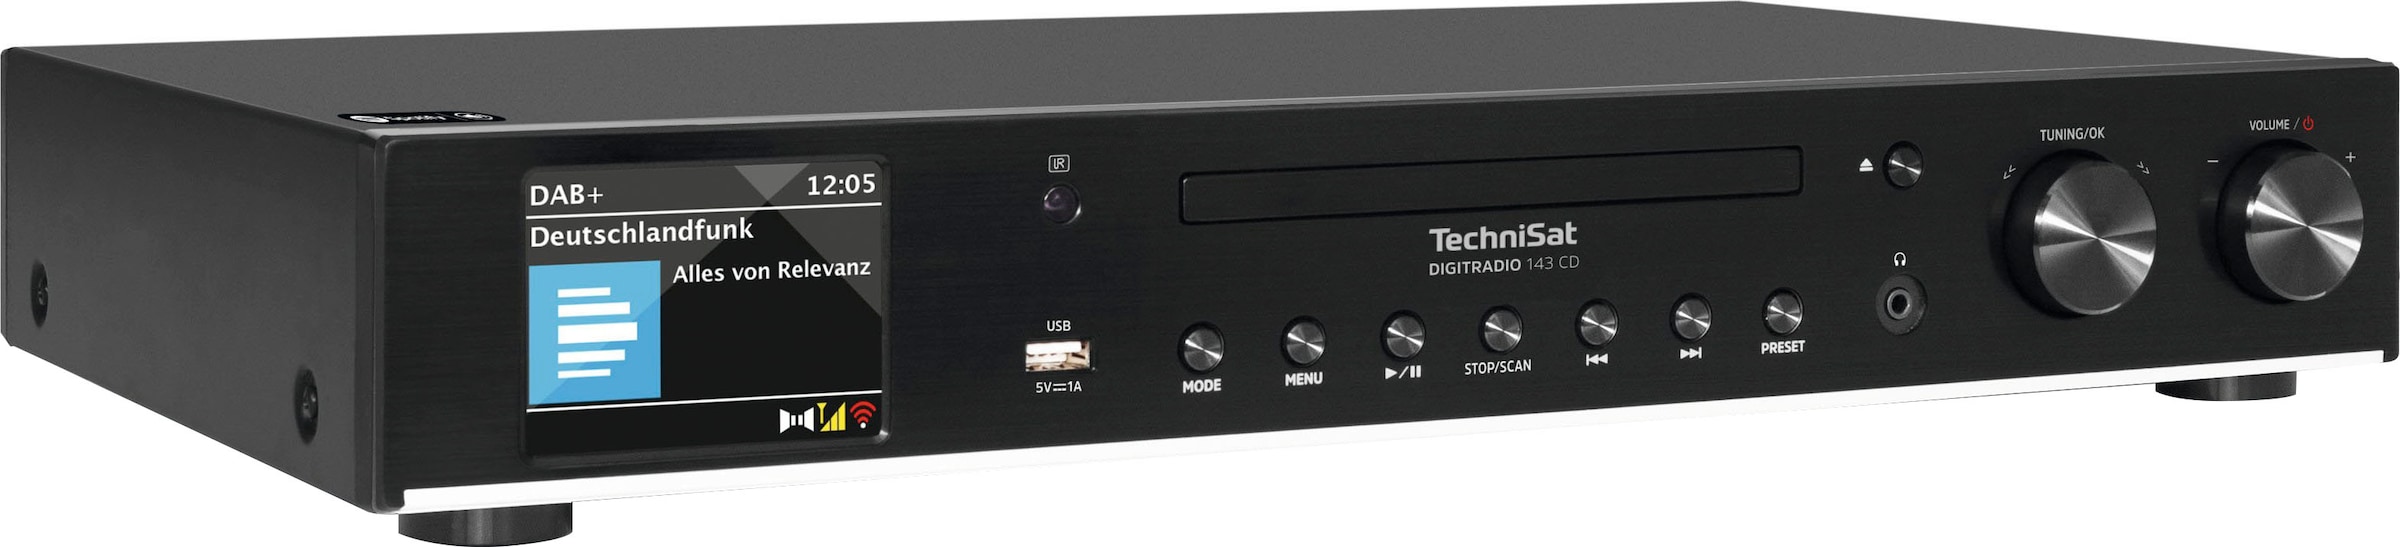 TechniSat Digitalradio (DAB+) mit jetzt 143 OTTO (V3)«, CD (Bluetooth-WLAN bestellen (DAB+)-UKW »DIGITRADIO bei RDS) Internetradio-Digitalradio